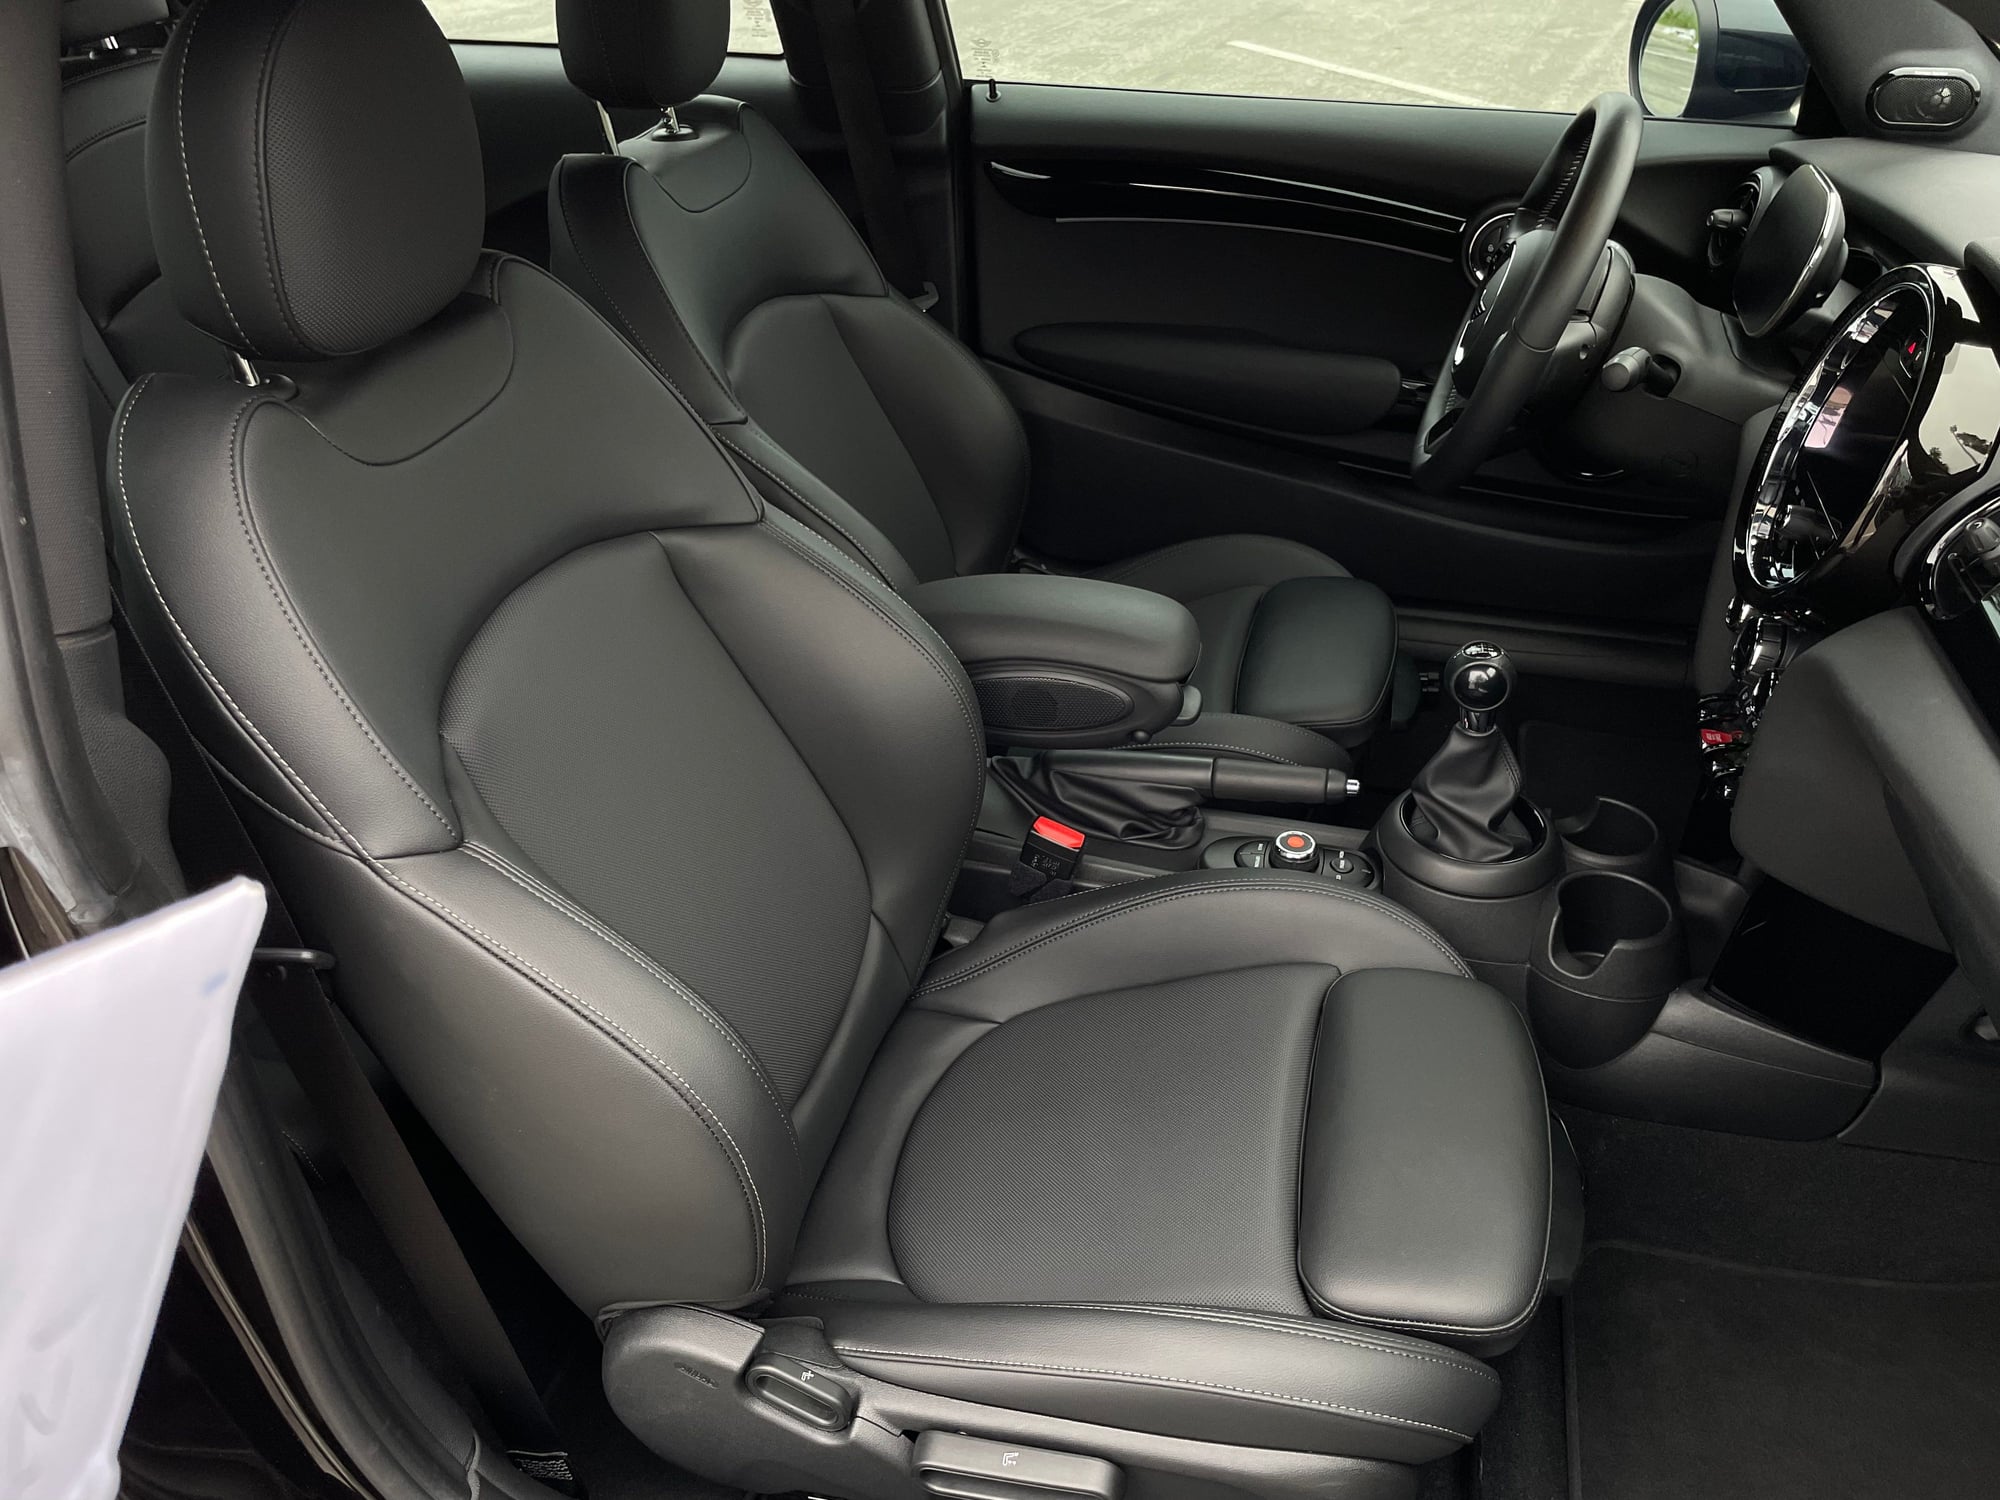 2022 Mini F56: Mini Hatch/Hardtop - 2022 Mini Cooper S manual transmission - Used - Ventura, CA 93003, United States